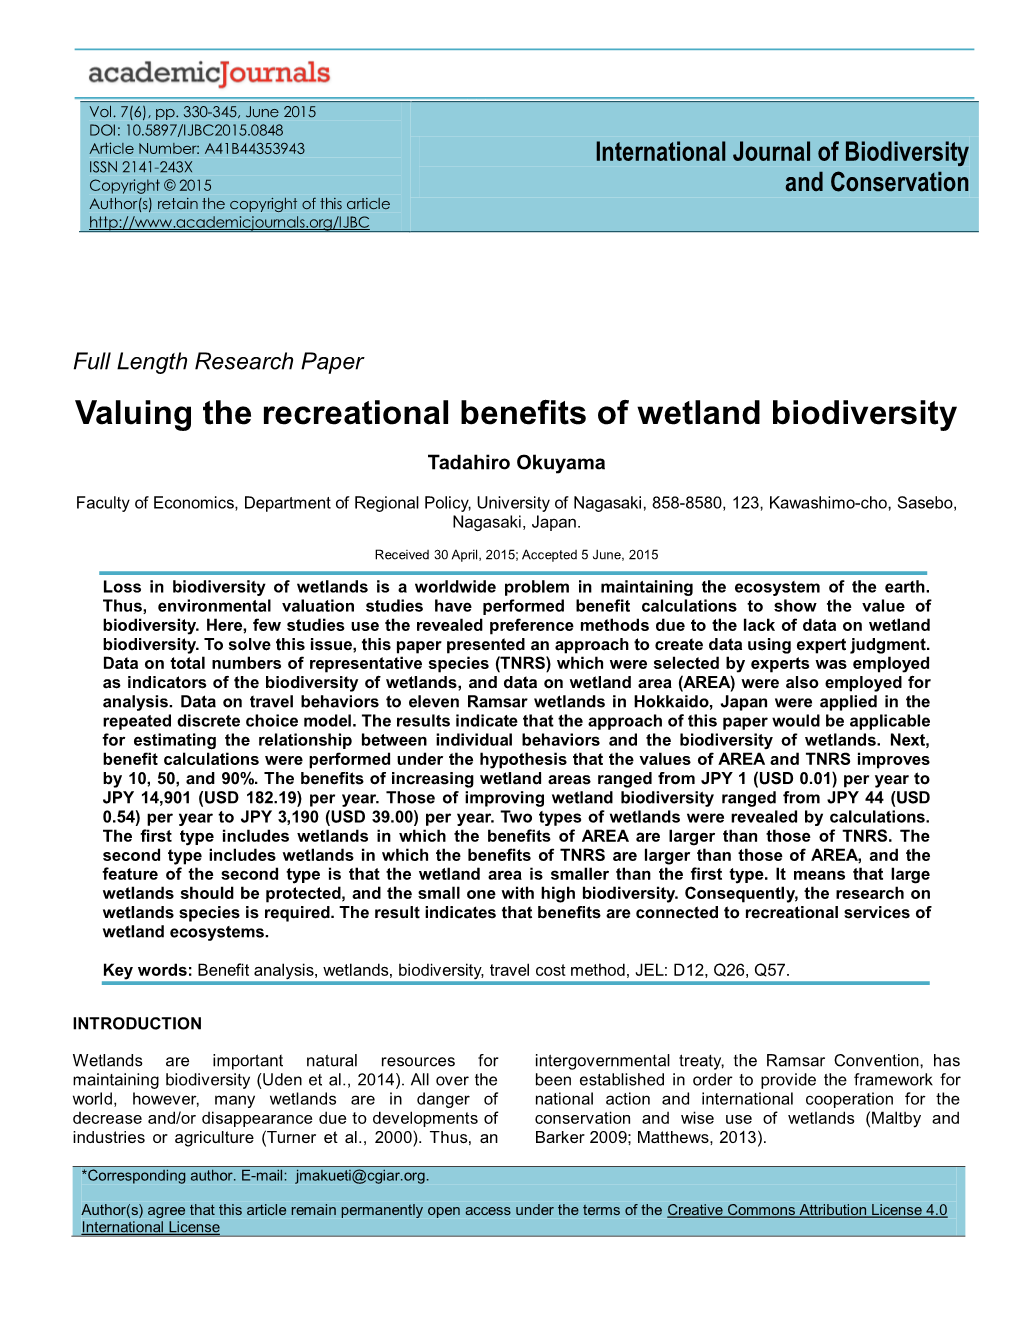 Valuing the Recreational Benefits of Wetland Biodiversity